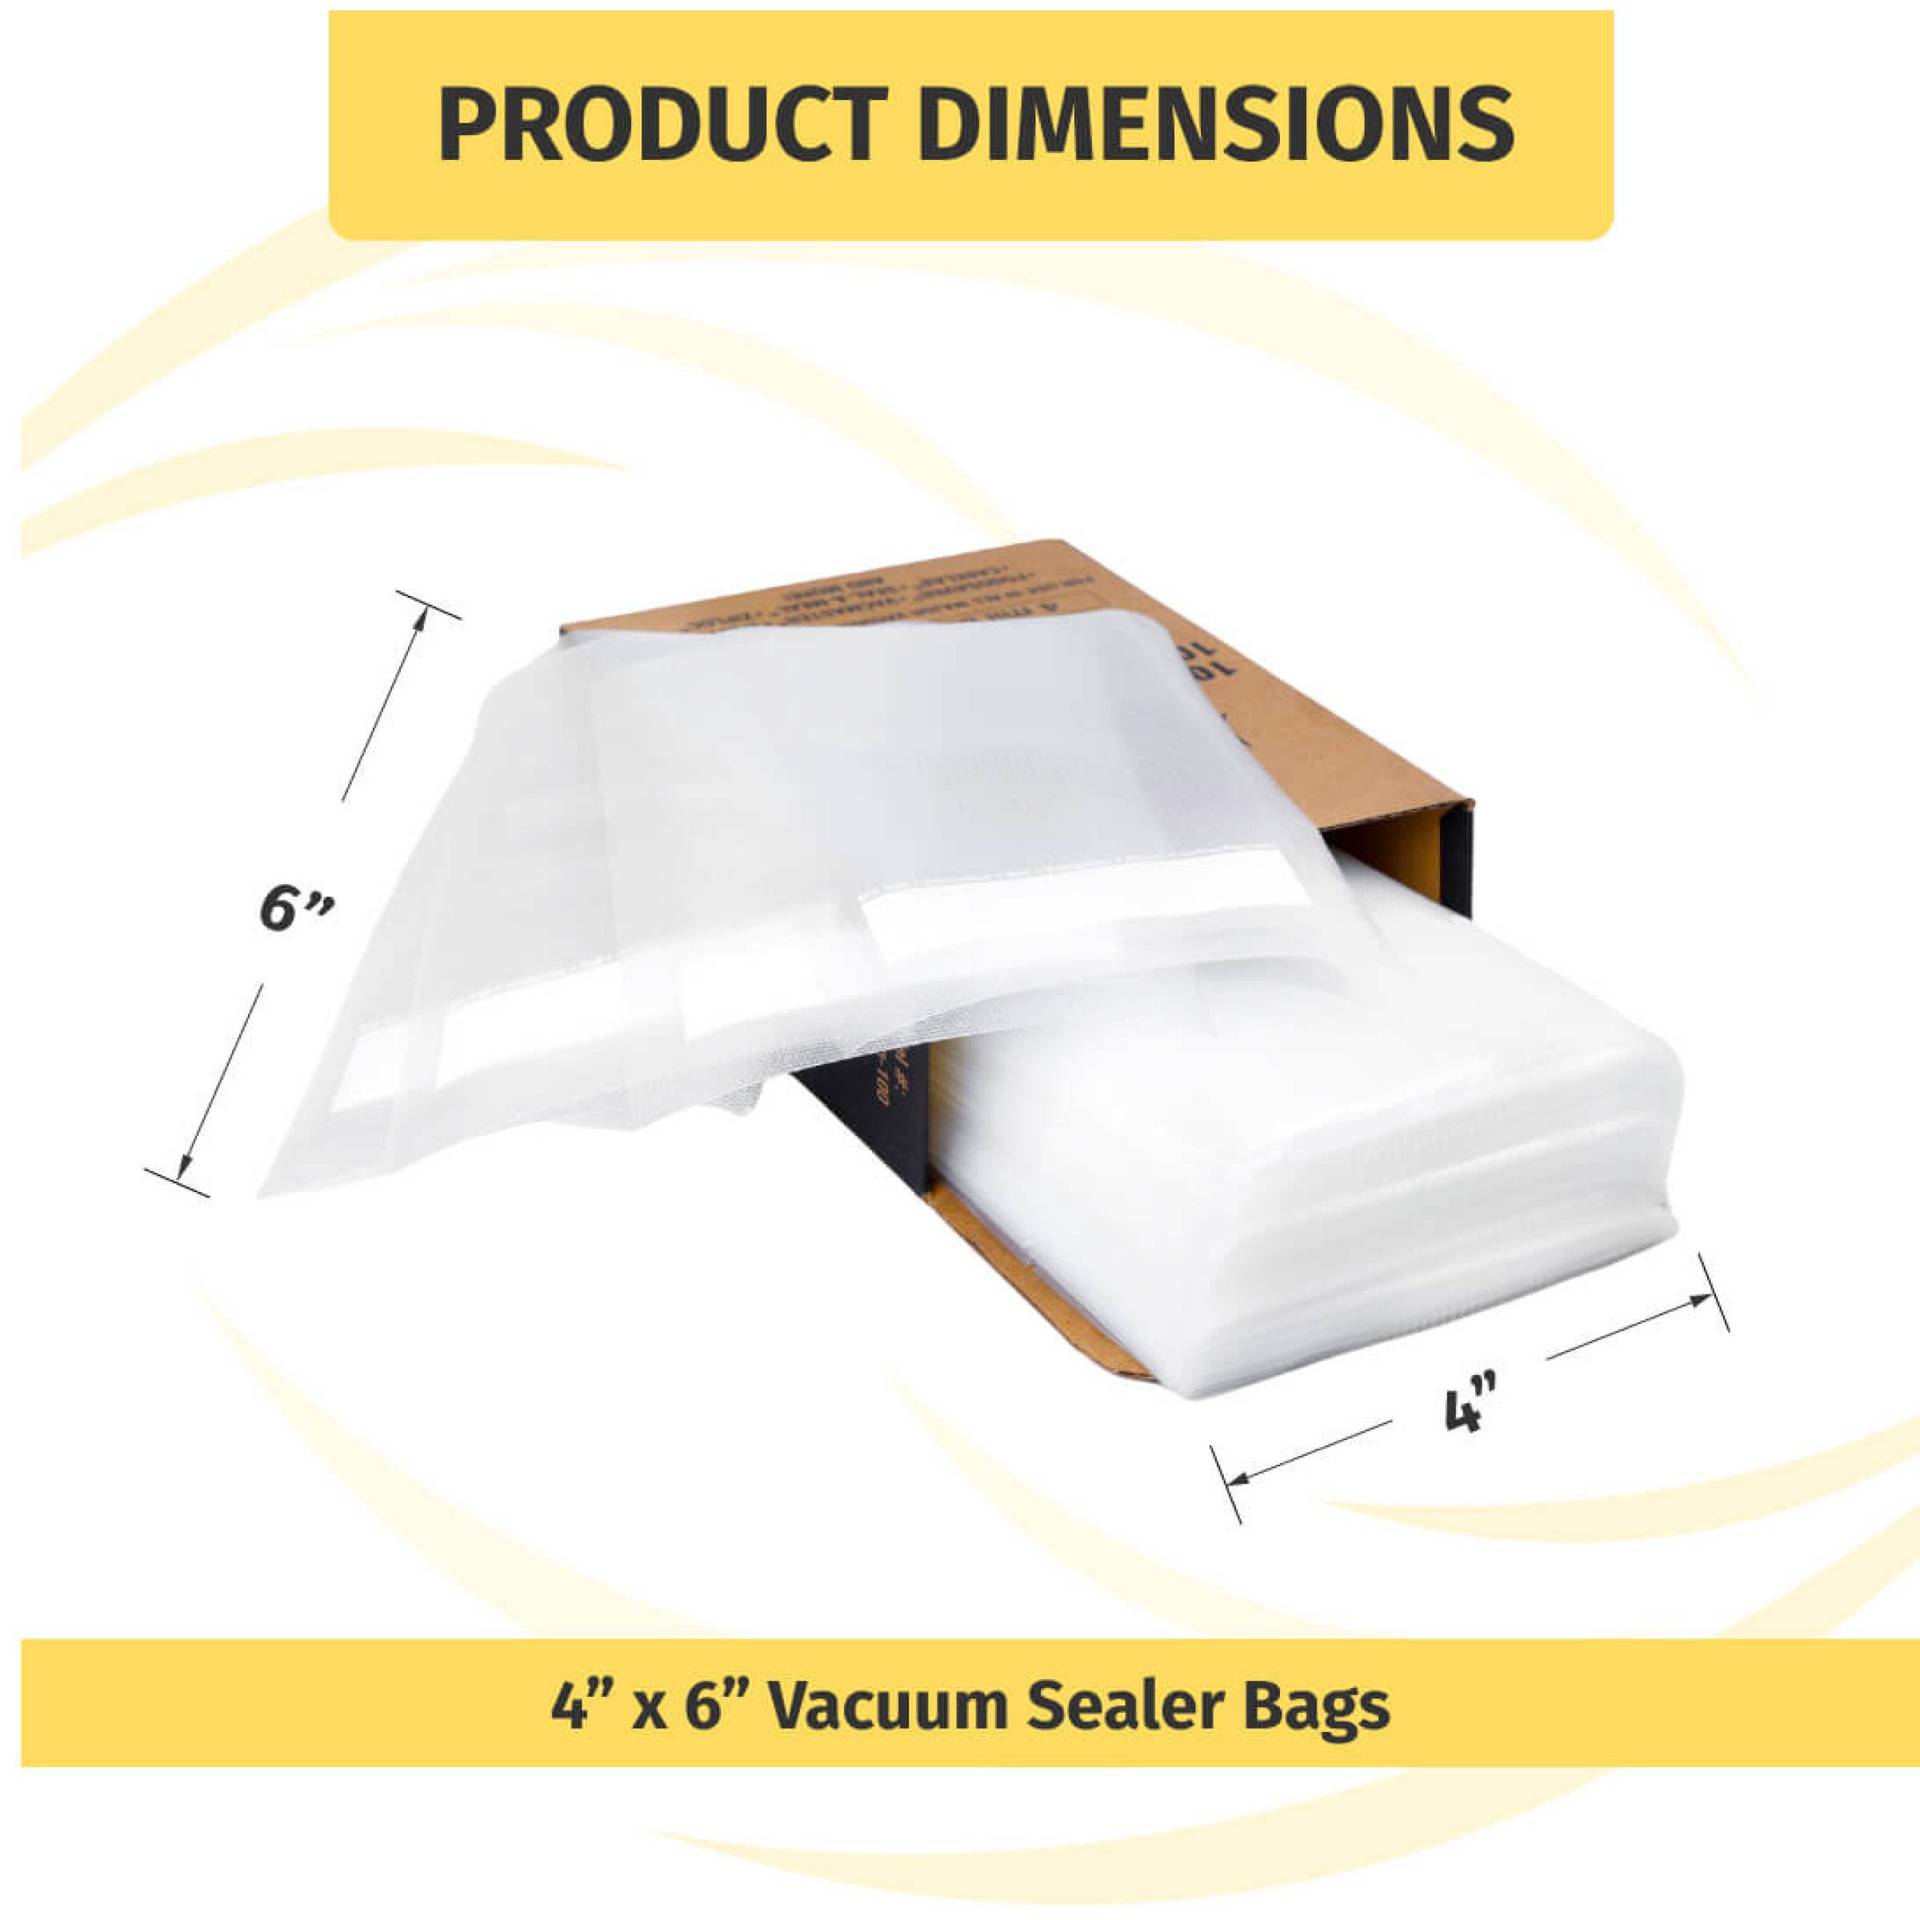 OutOfAir 4 x 6 (Mini Size) - 4 Mil - Commercial Grade Vacuum Sealer Bags - 100 Bags